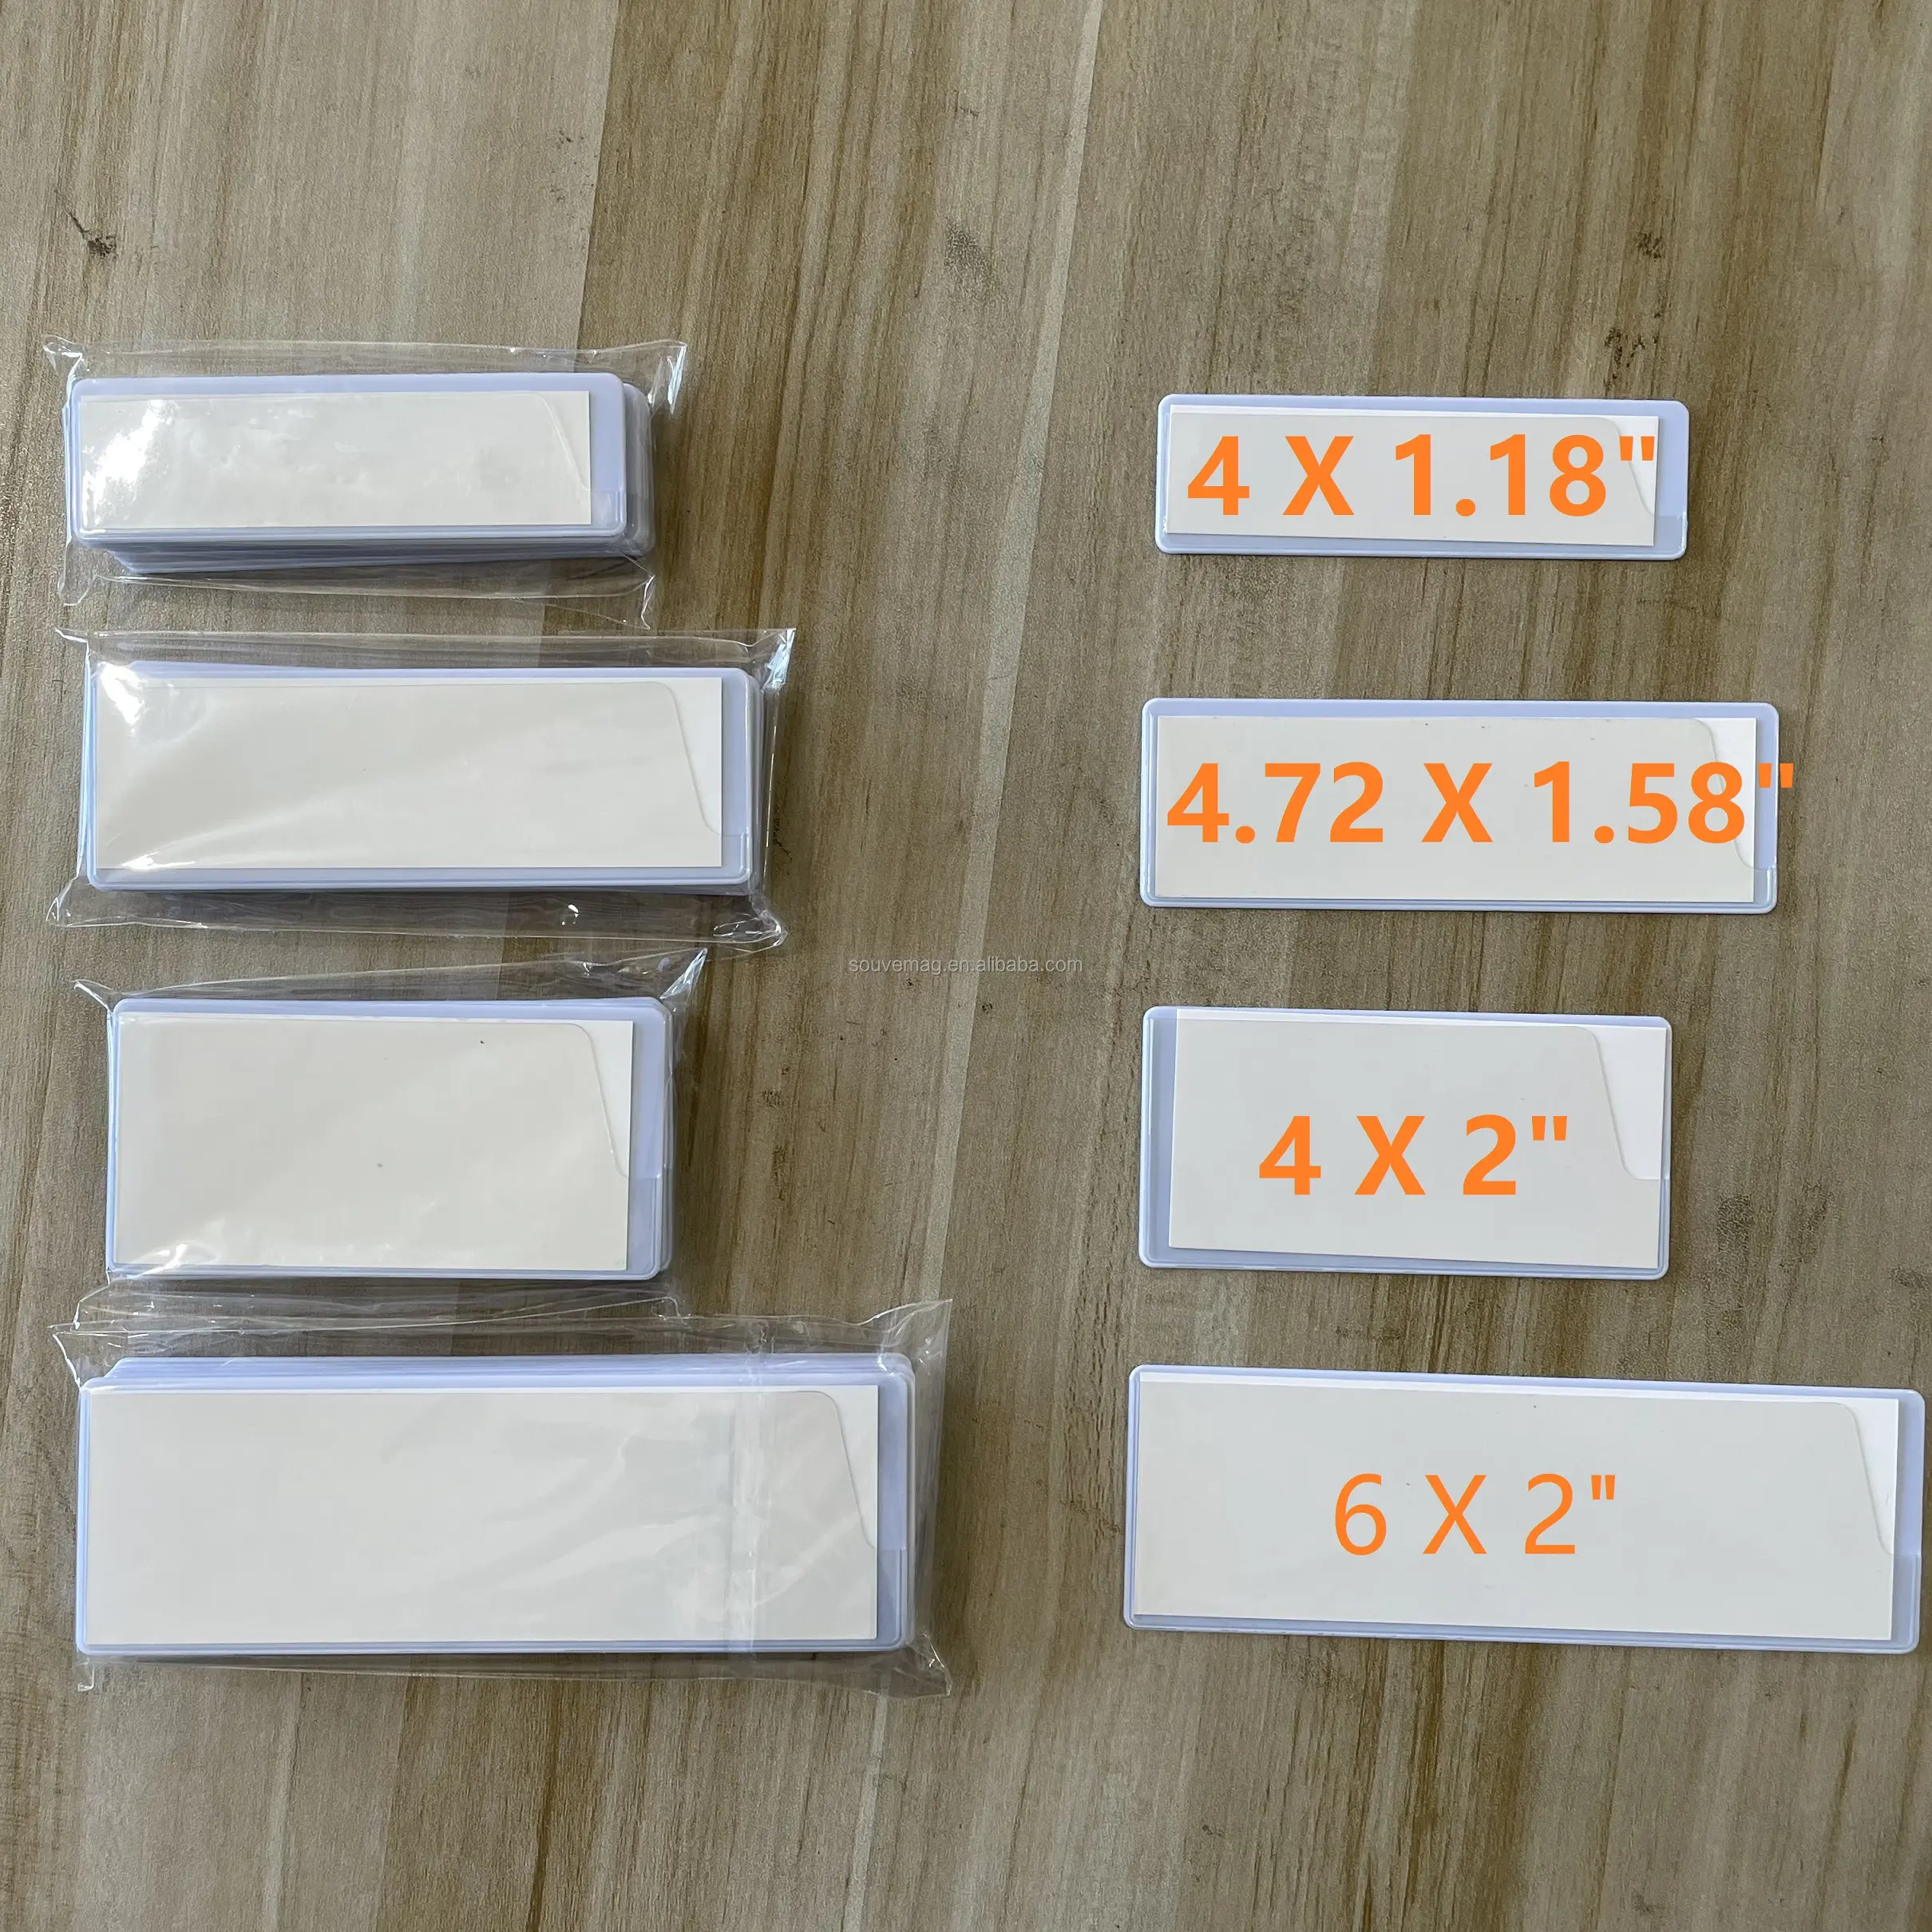 Welded Label Clip Sticker For Non Metal Surface Shelf/Bin Label Holders Easy Change Paper Label Holder